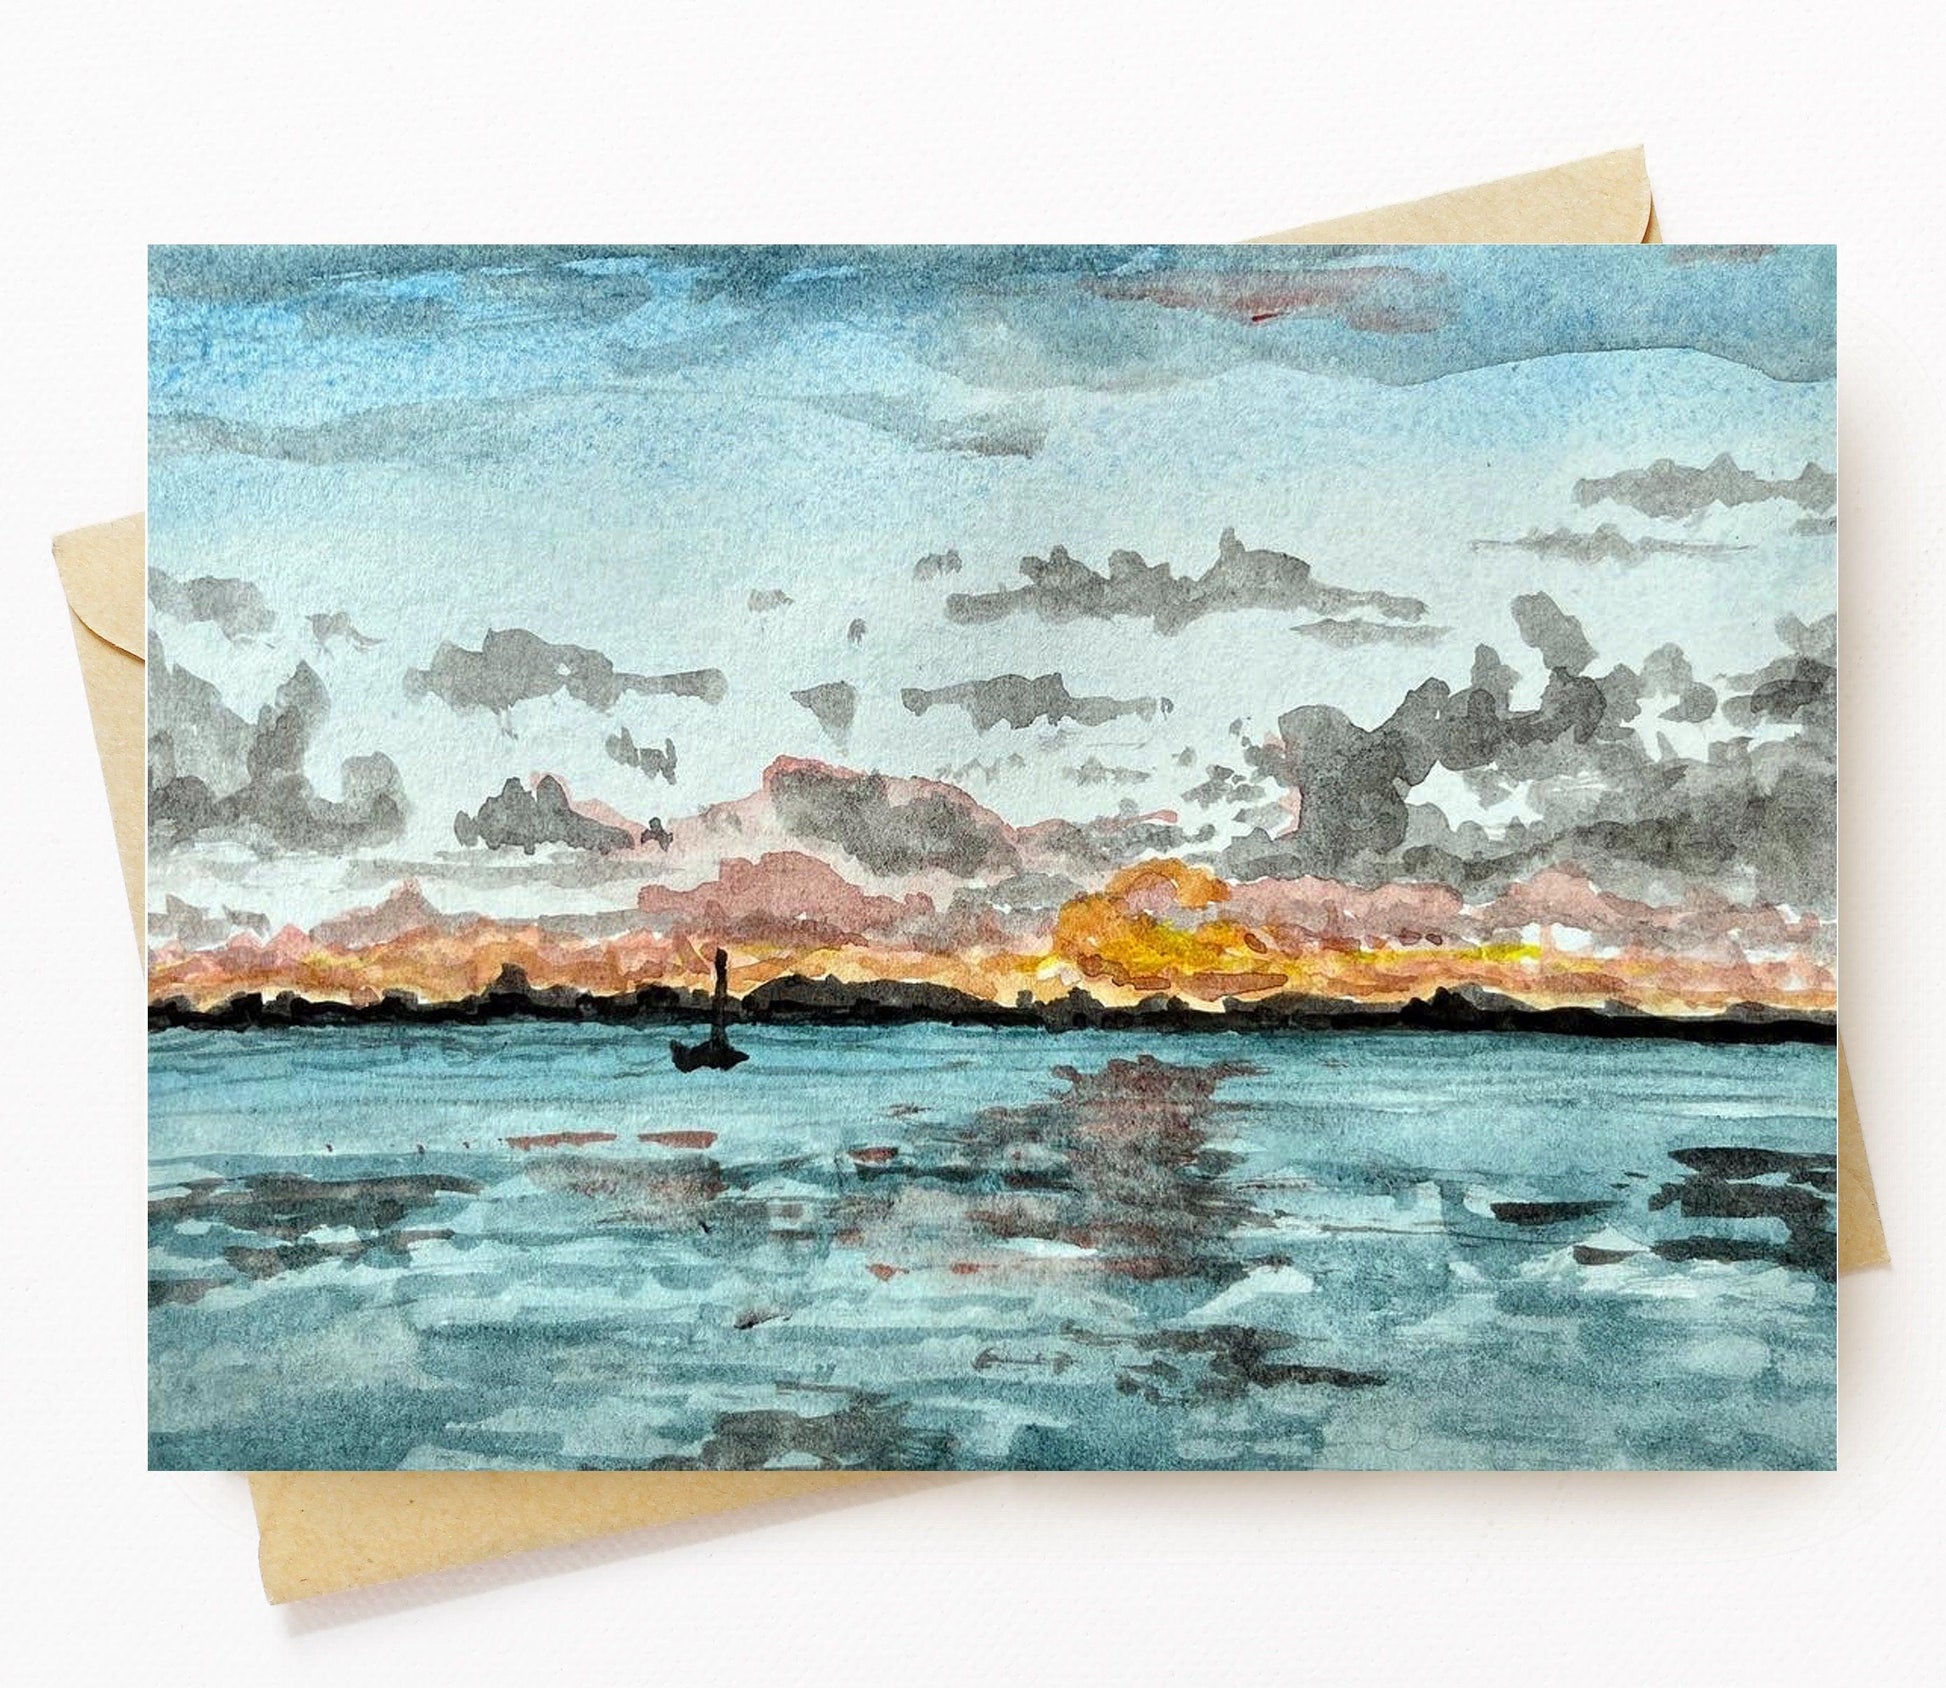 BellavanceInk: Greeting Card With Watercolor Ocean Scape At Harbor Island Bahamas Dunmore Town  5 x 7 Inches - BellavanceInk